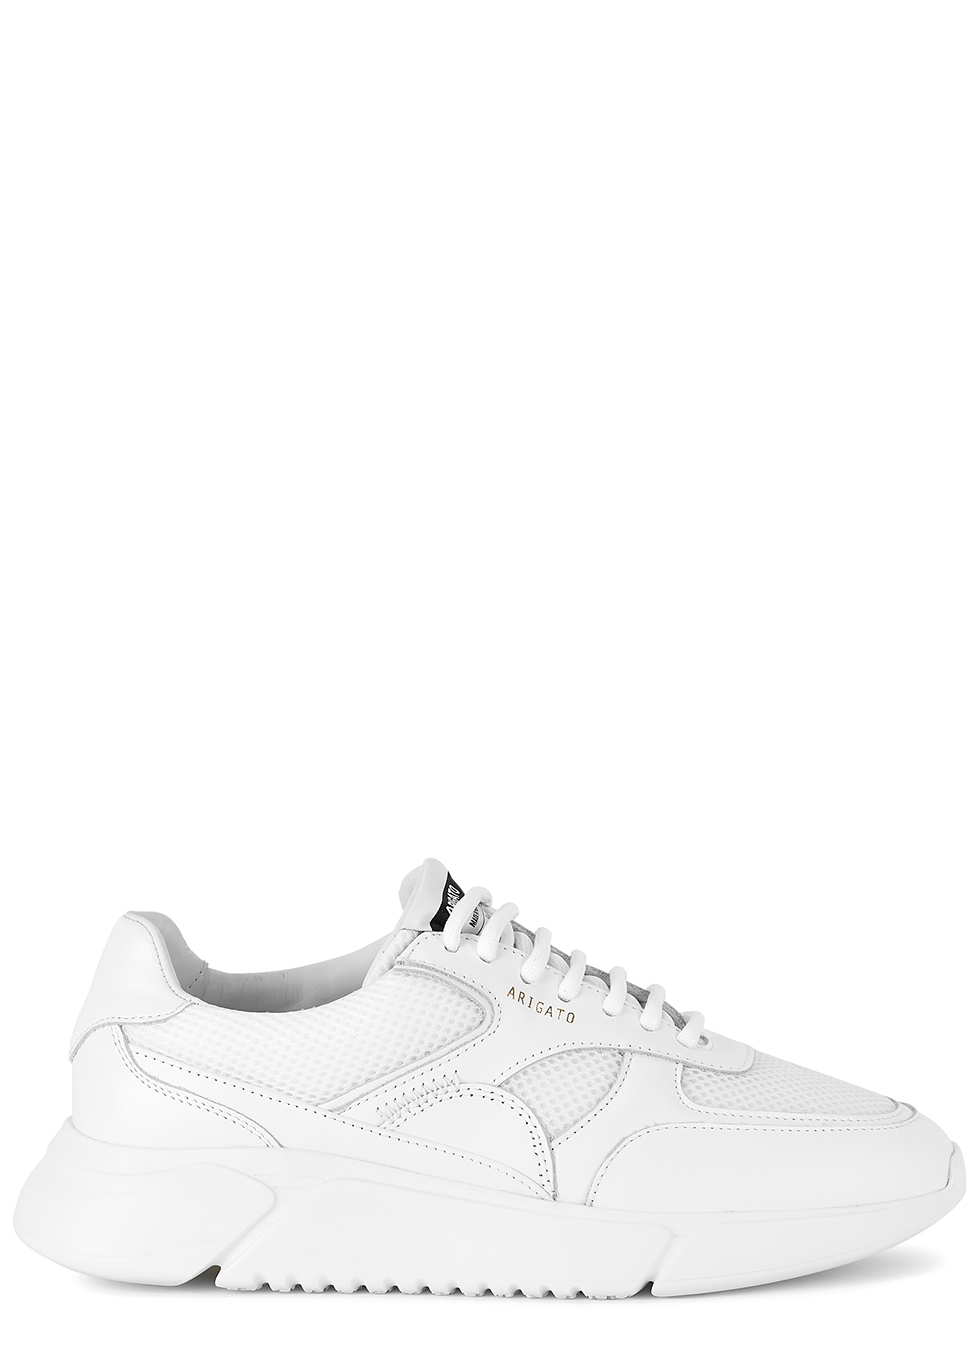 Axel Arigato Genesis white leather sneakers - Harvey Nichols